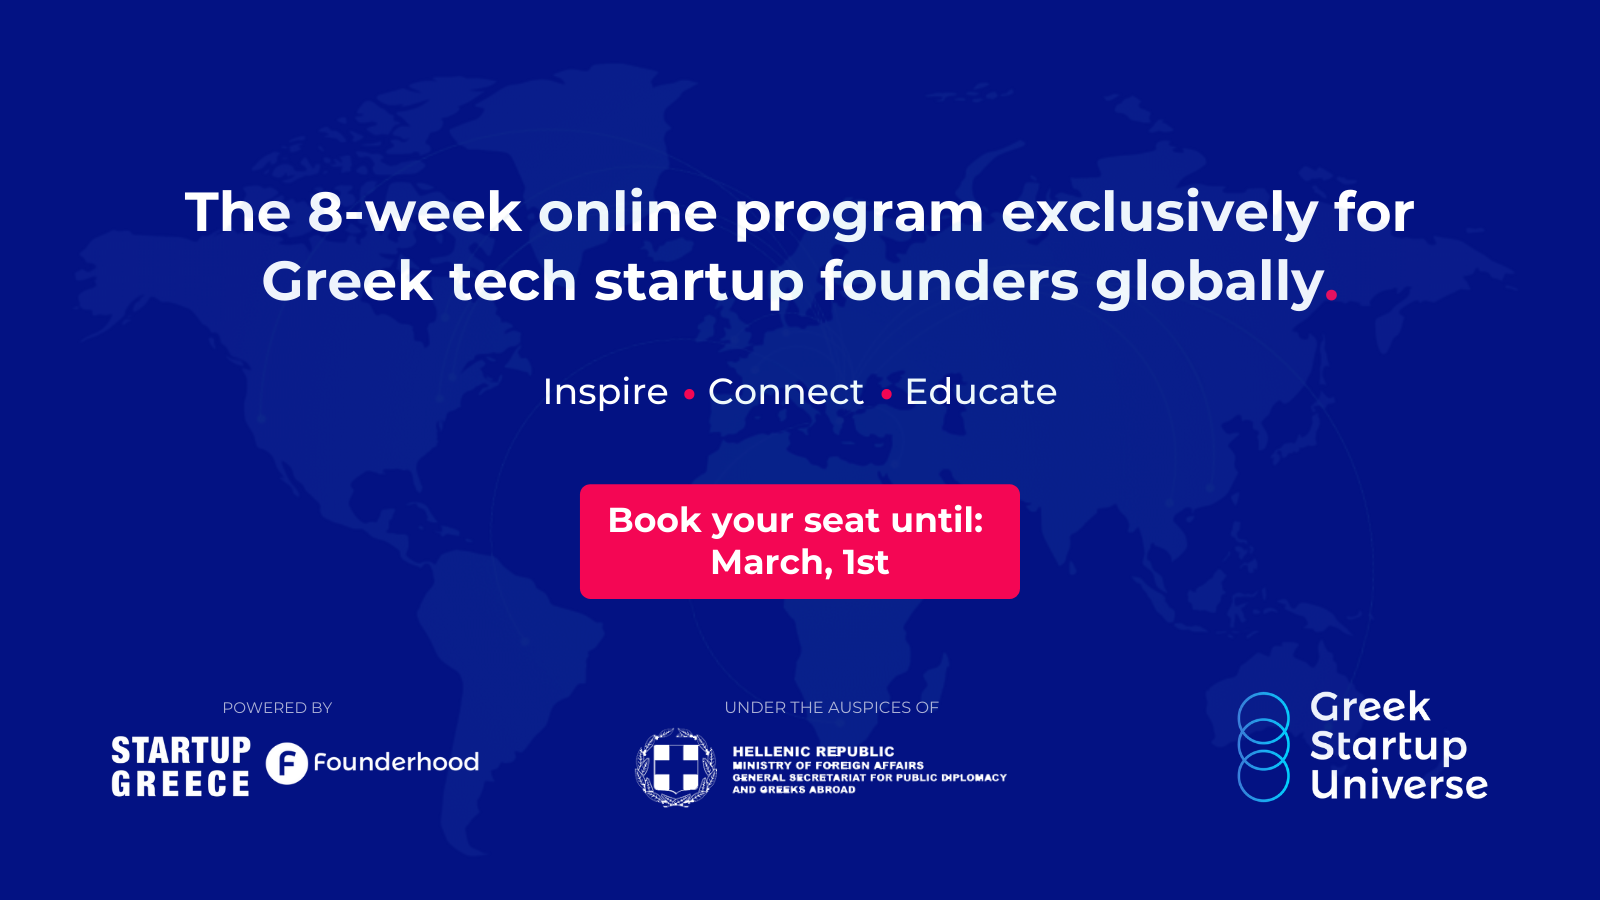 Greek Startup Universe: Η νέα πρωτοβουλία για tech early-stage ideas & startups, του Startup Greece σε συνεργασία με το Founderhood, είναι προ των πυλών!